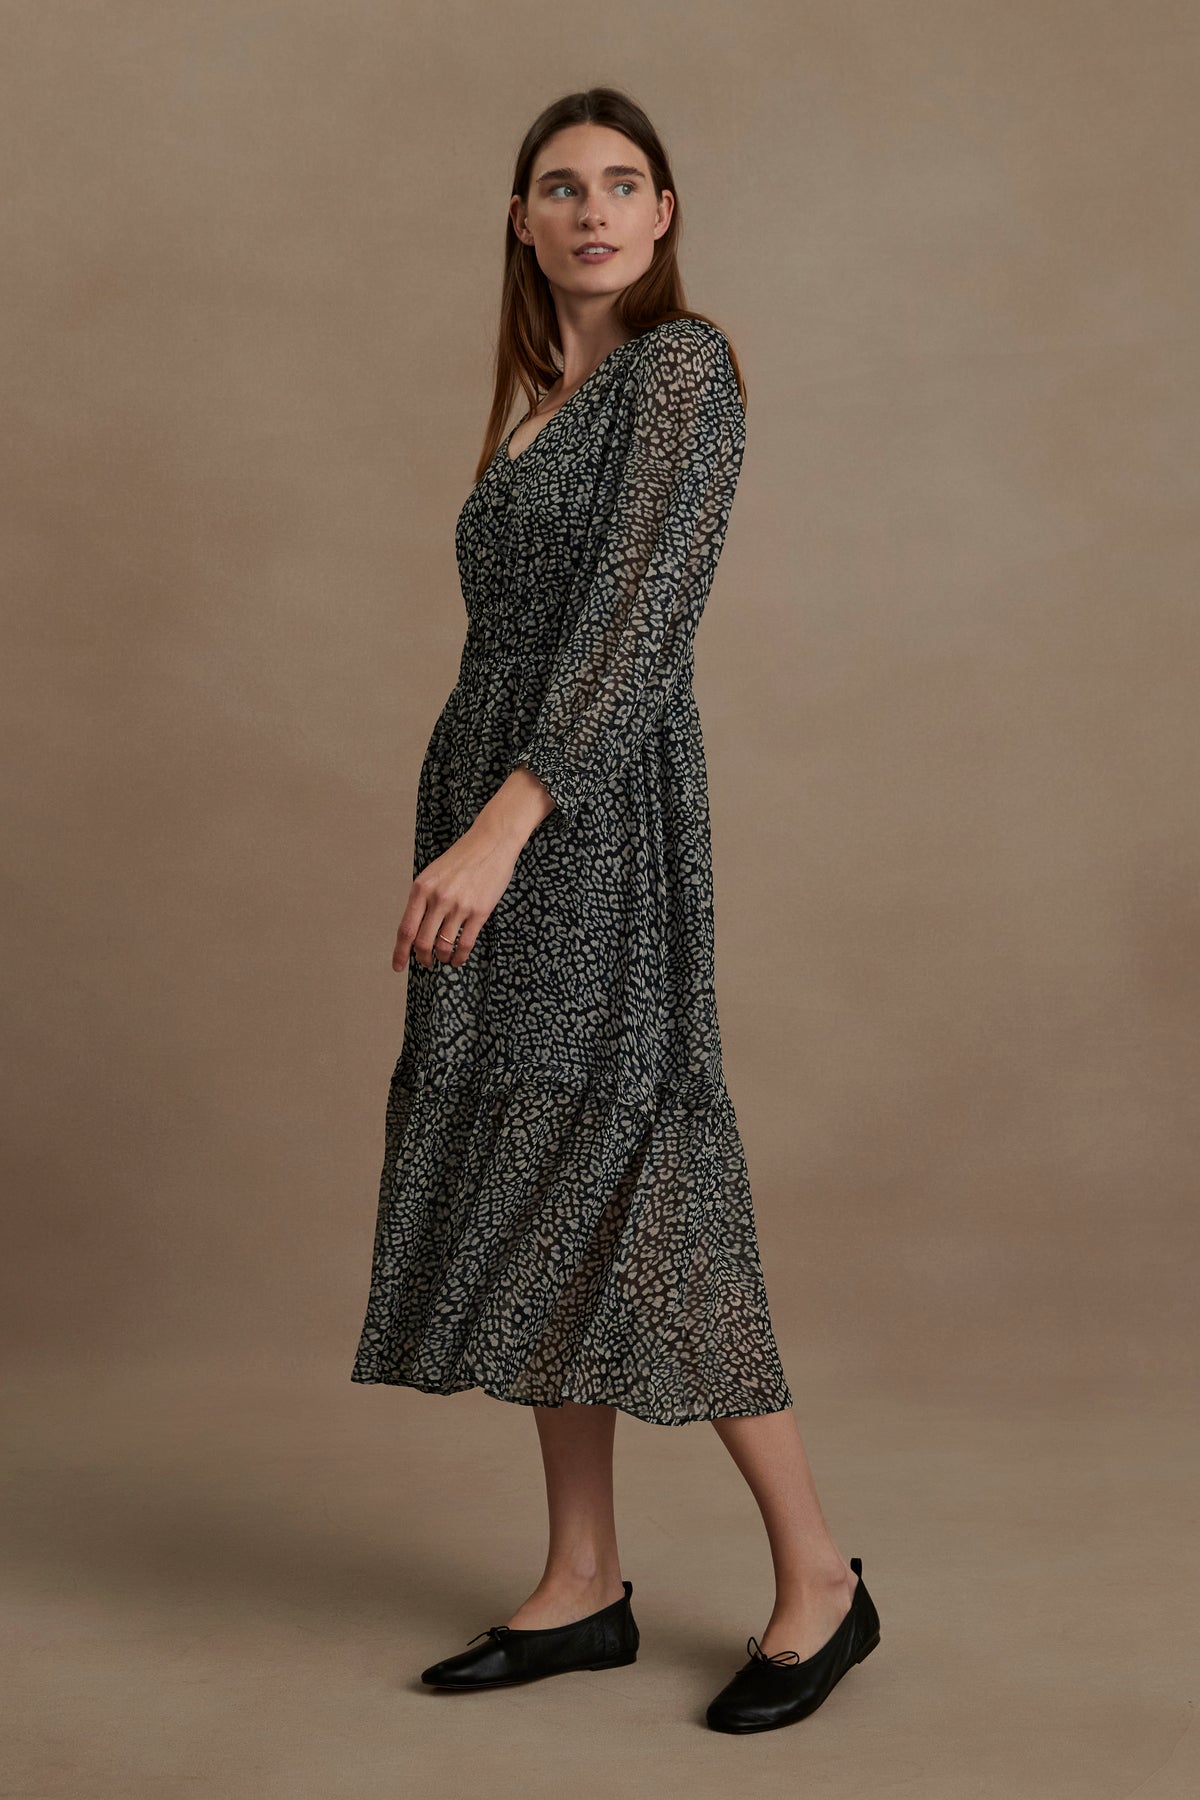 The model is wearing a Velvet by Graham & Spencer LESLIE PRINTED BOHO DRESS with a flared skirt.-35630472134849